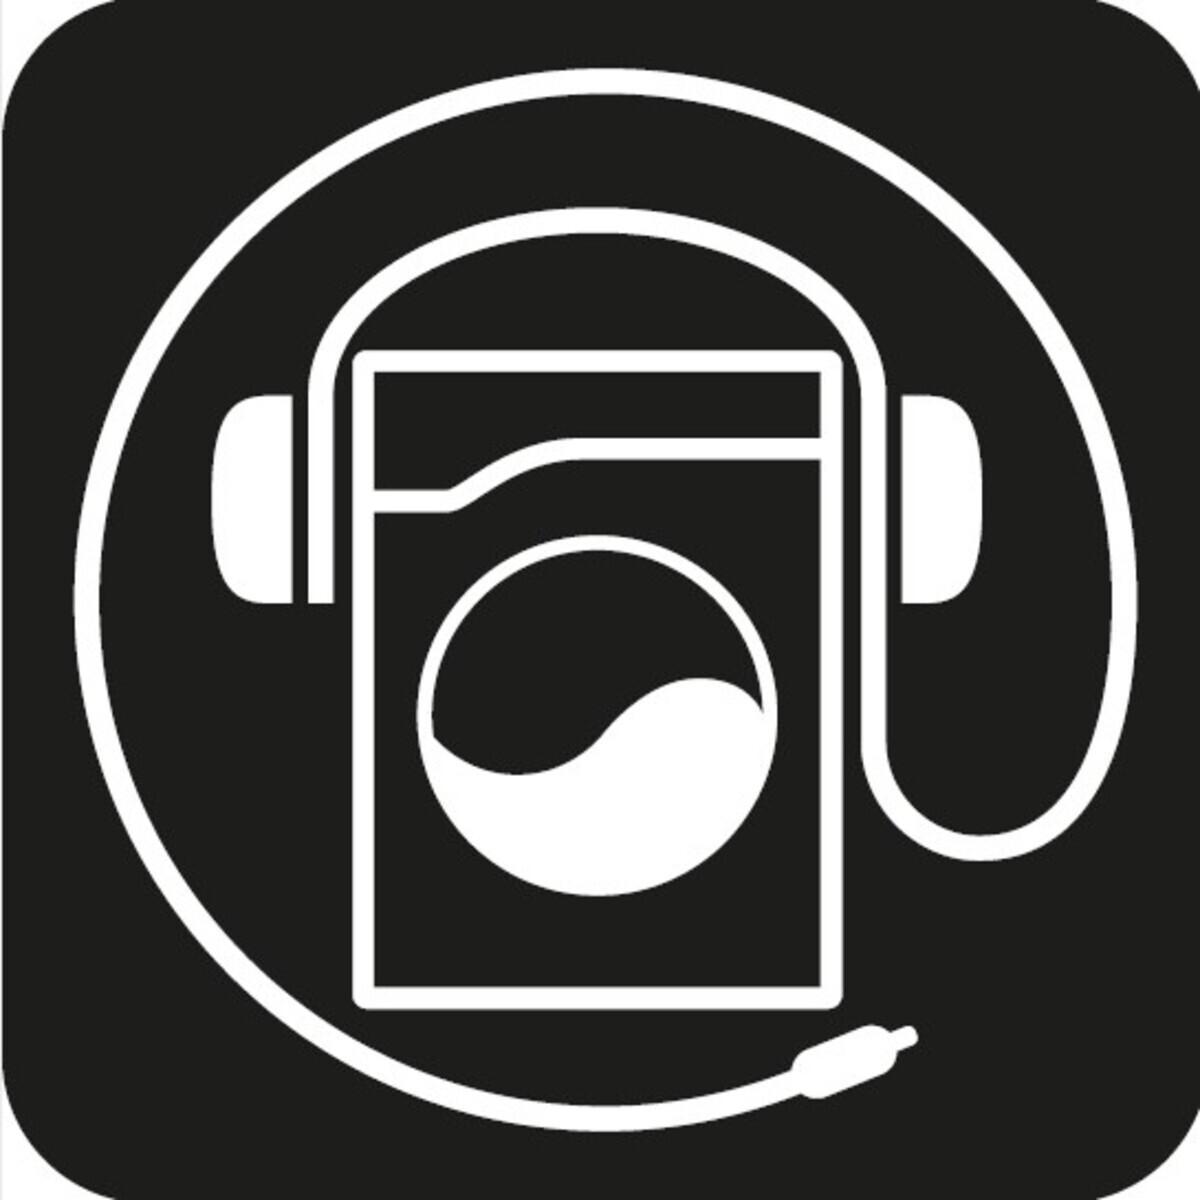 Digital Talents Podcast